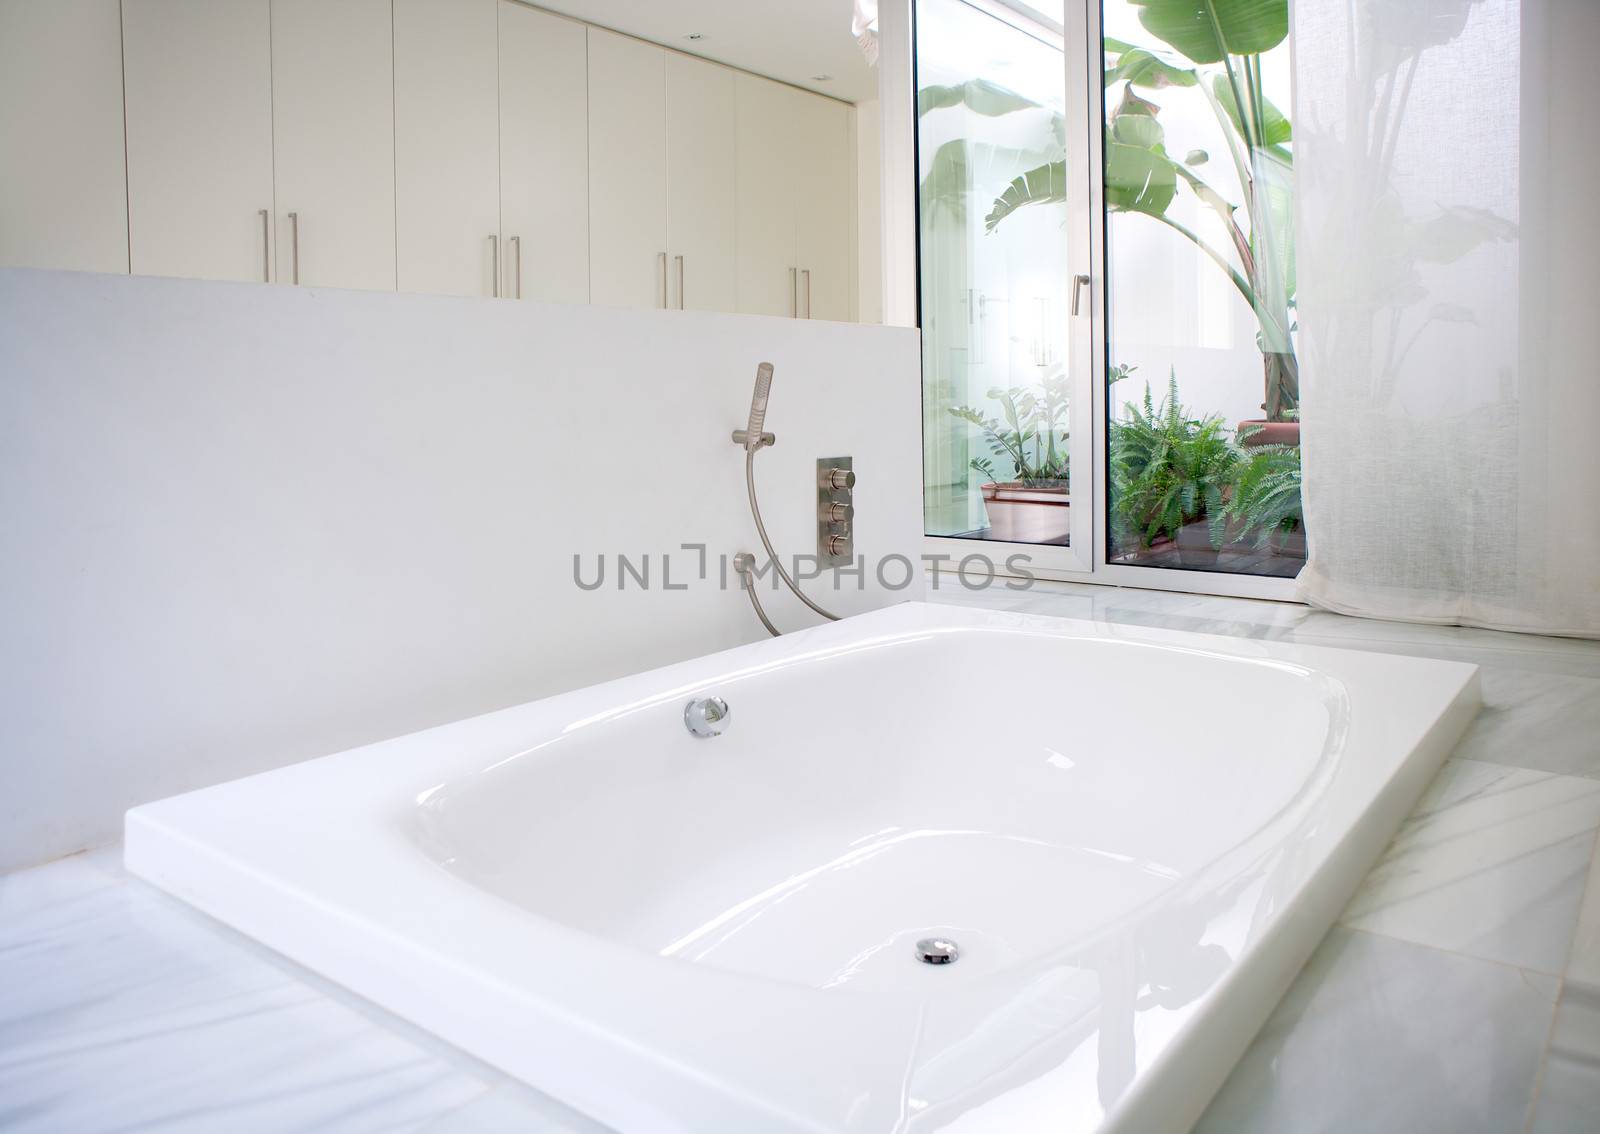 Modern white house bathroom bathtub with courtyard skylight by lunamarina